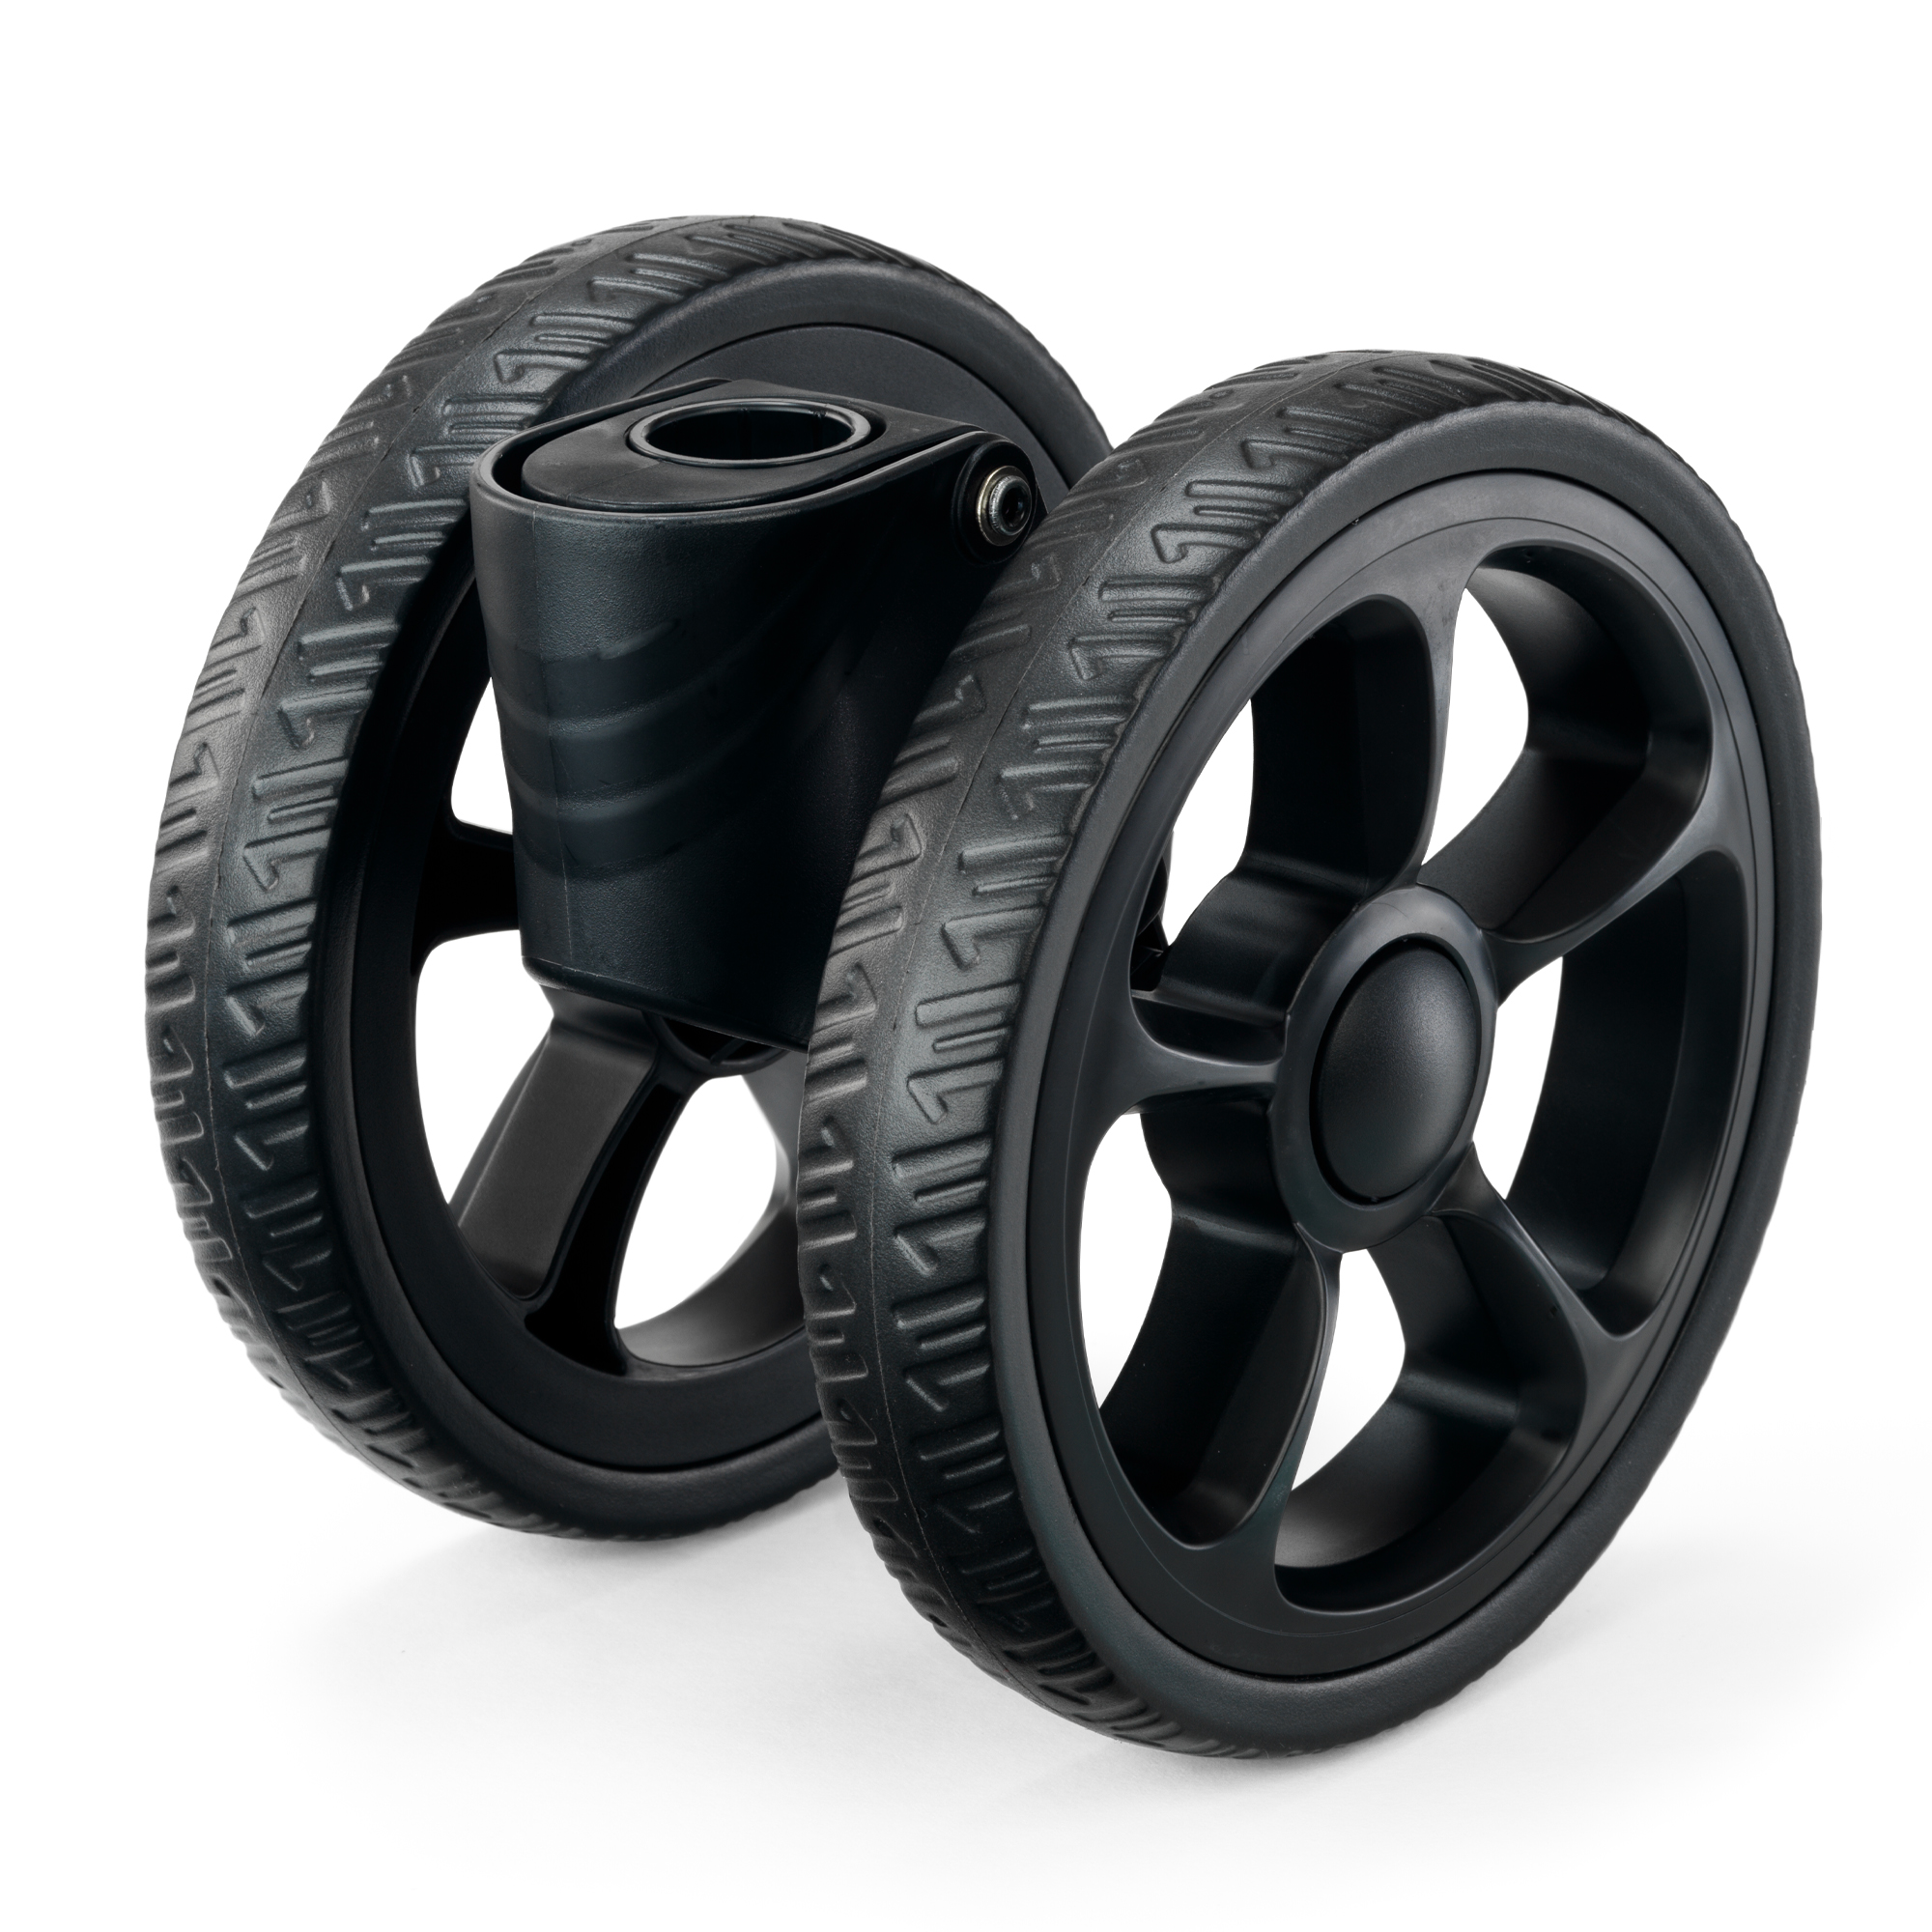 Viaro Stroller Front Wheel Assembly - Black Tread